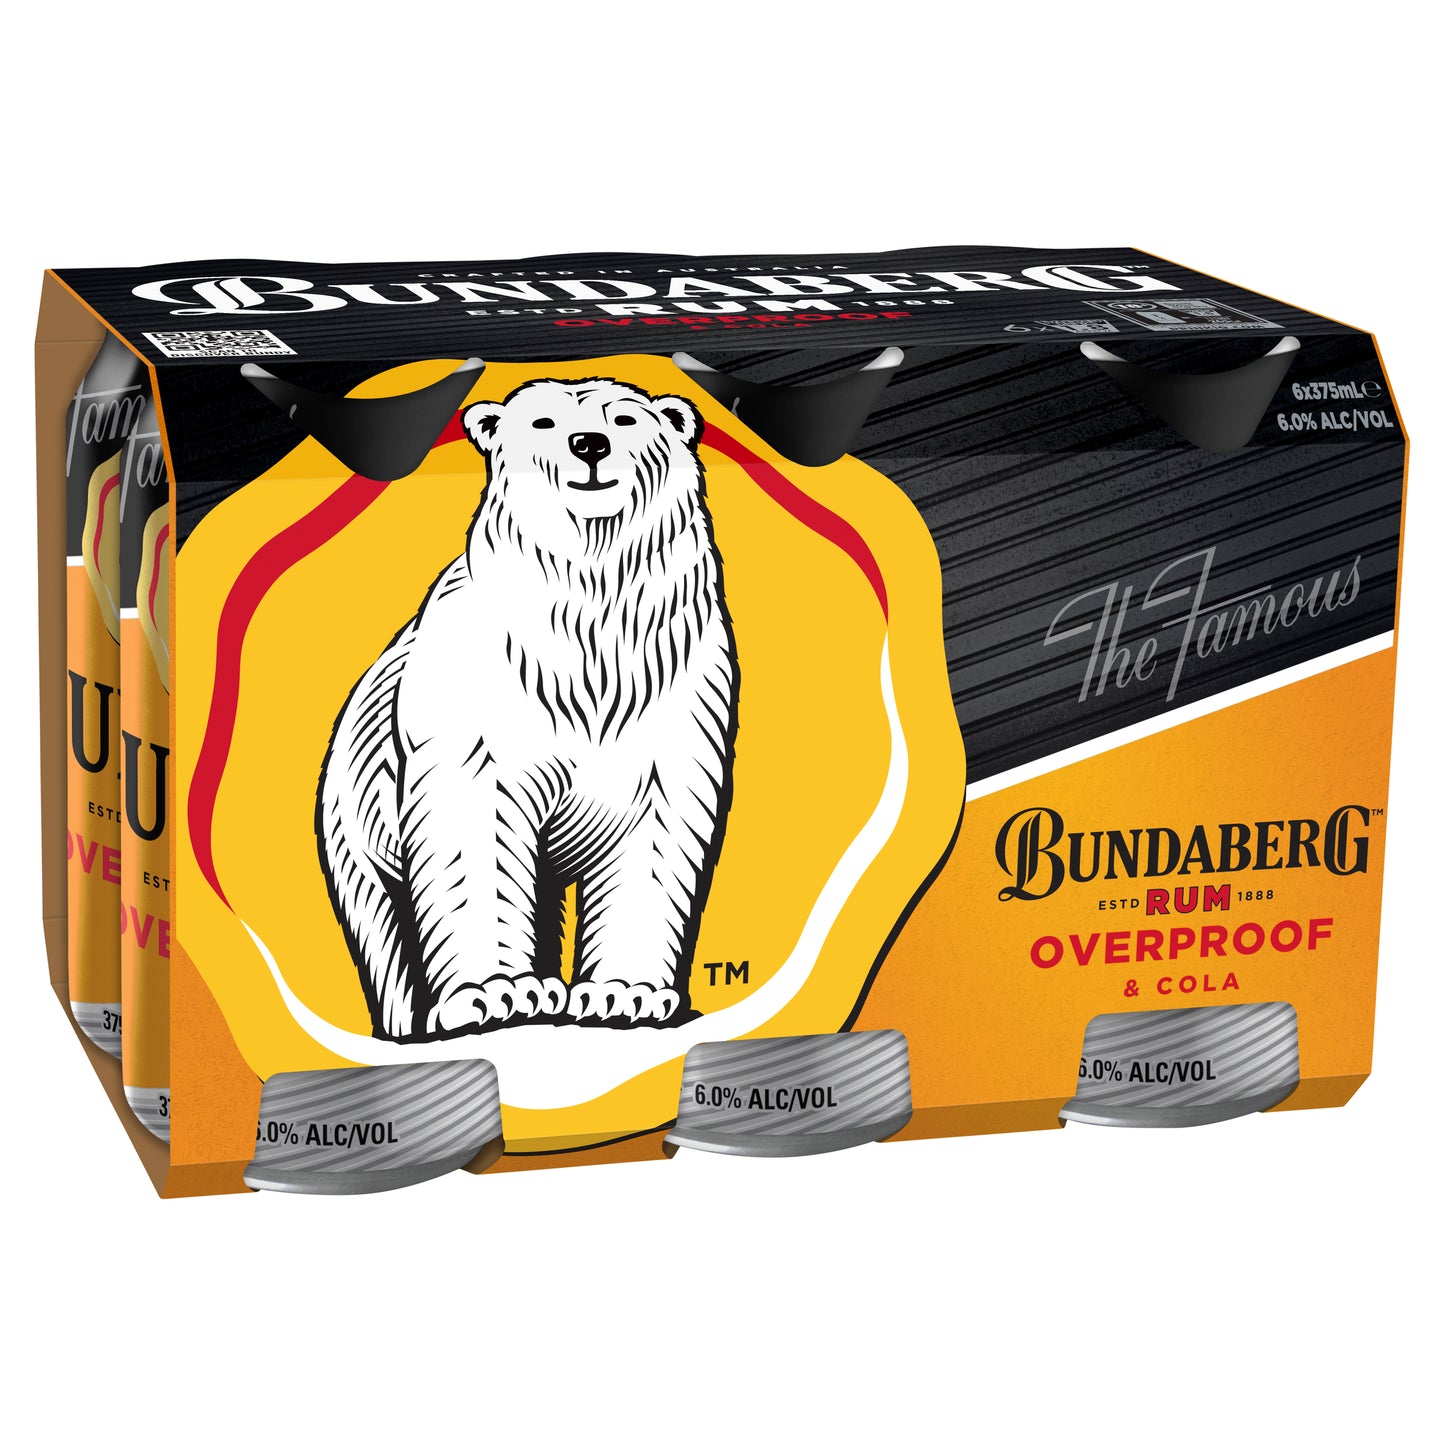 Bundaberg OP Rum and Cola 6x375mL cans